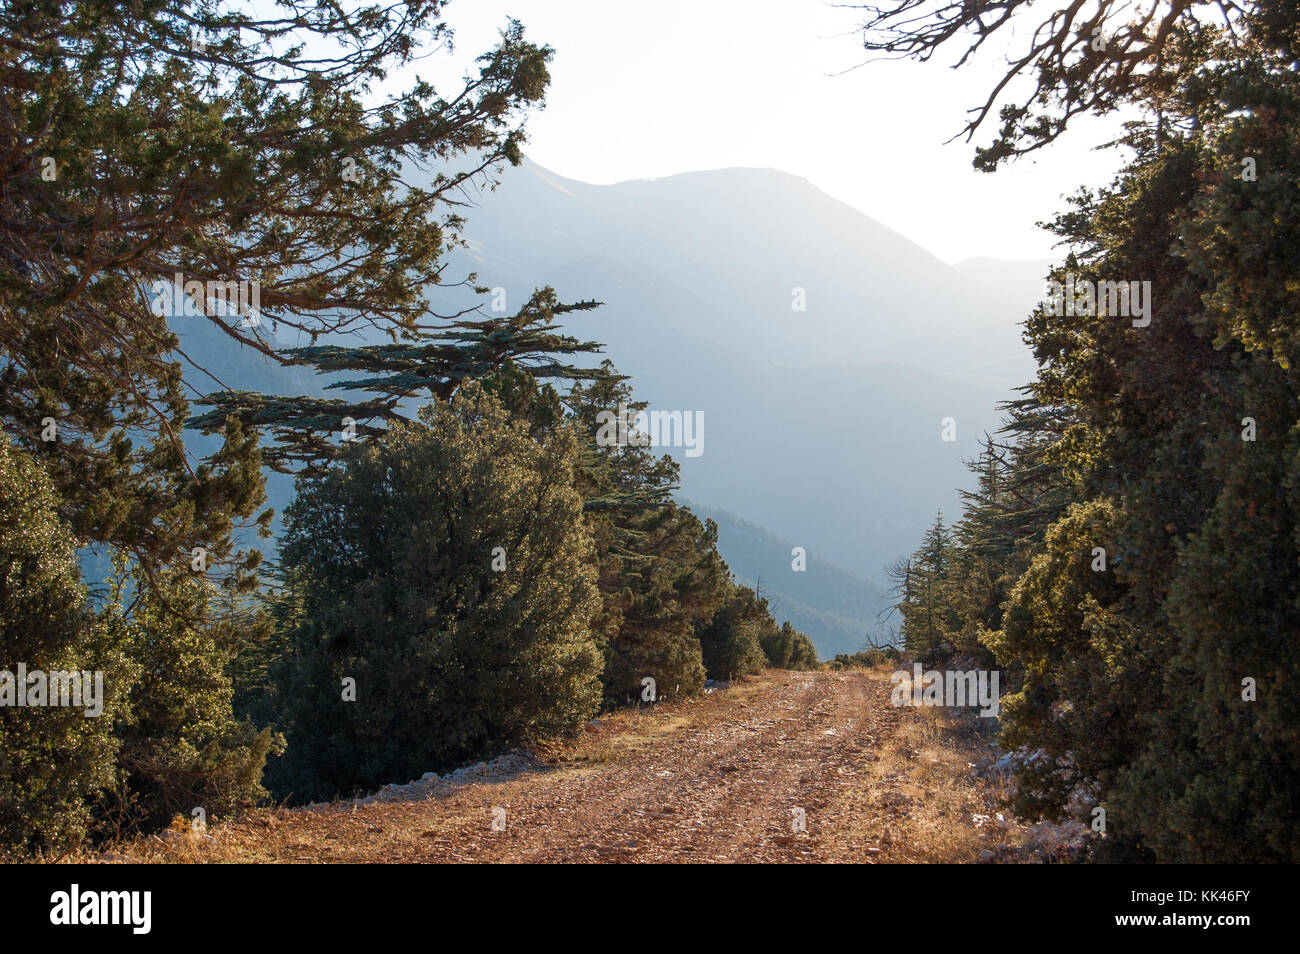 Dirt road in cedrus forest. Way to Elmali, Turkey region. Coniferous tree. Stock Photo